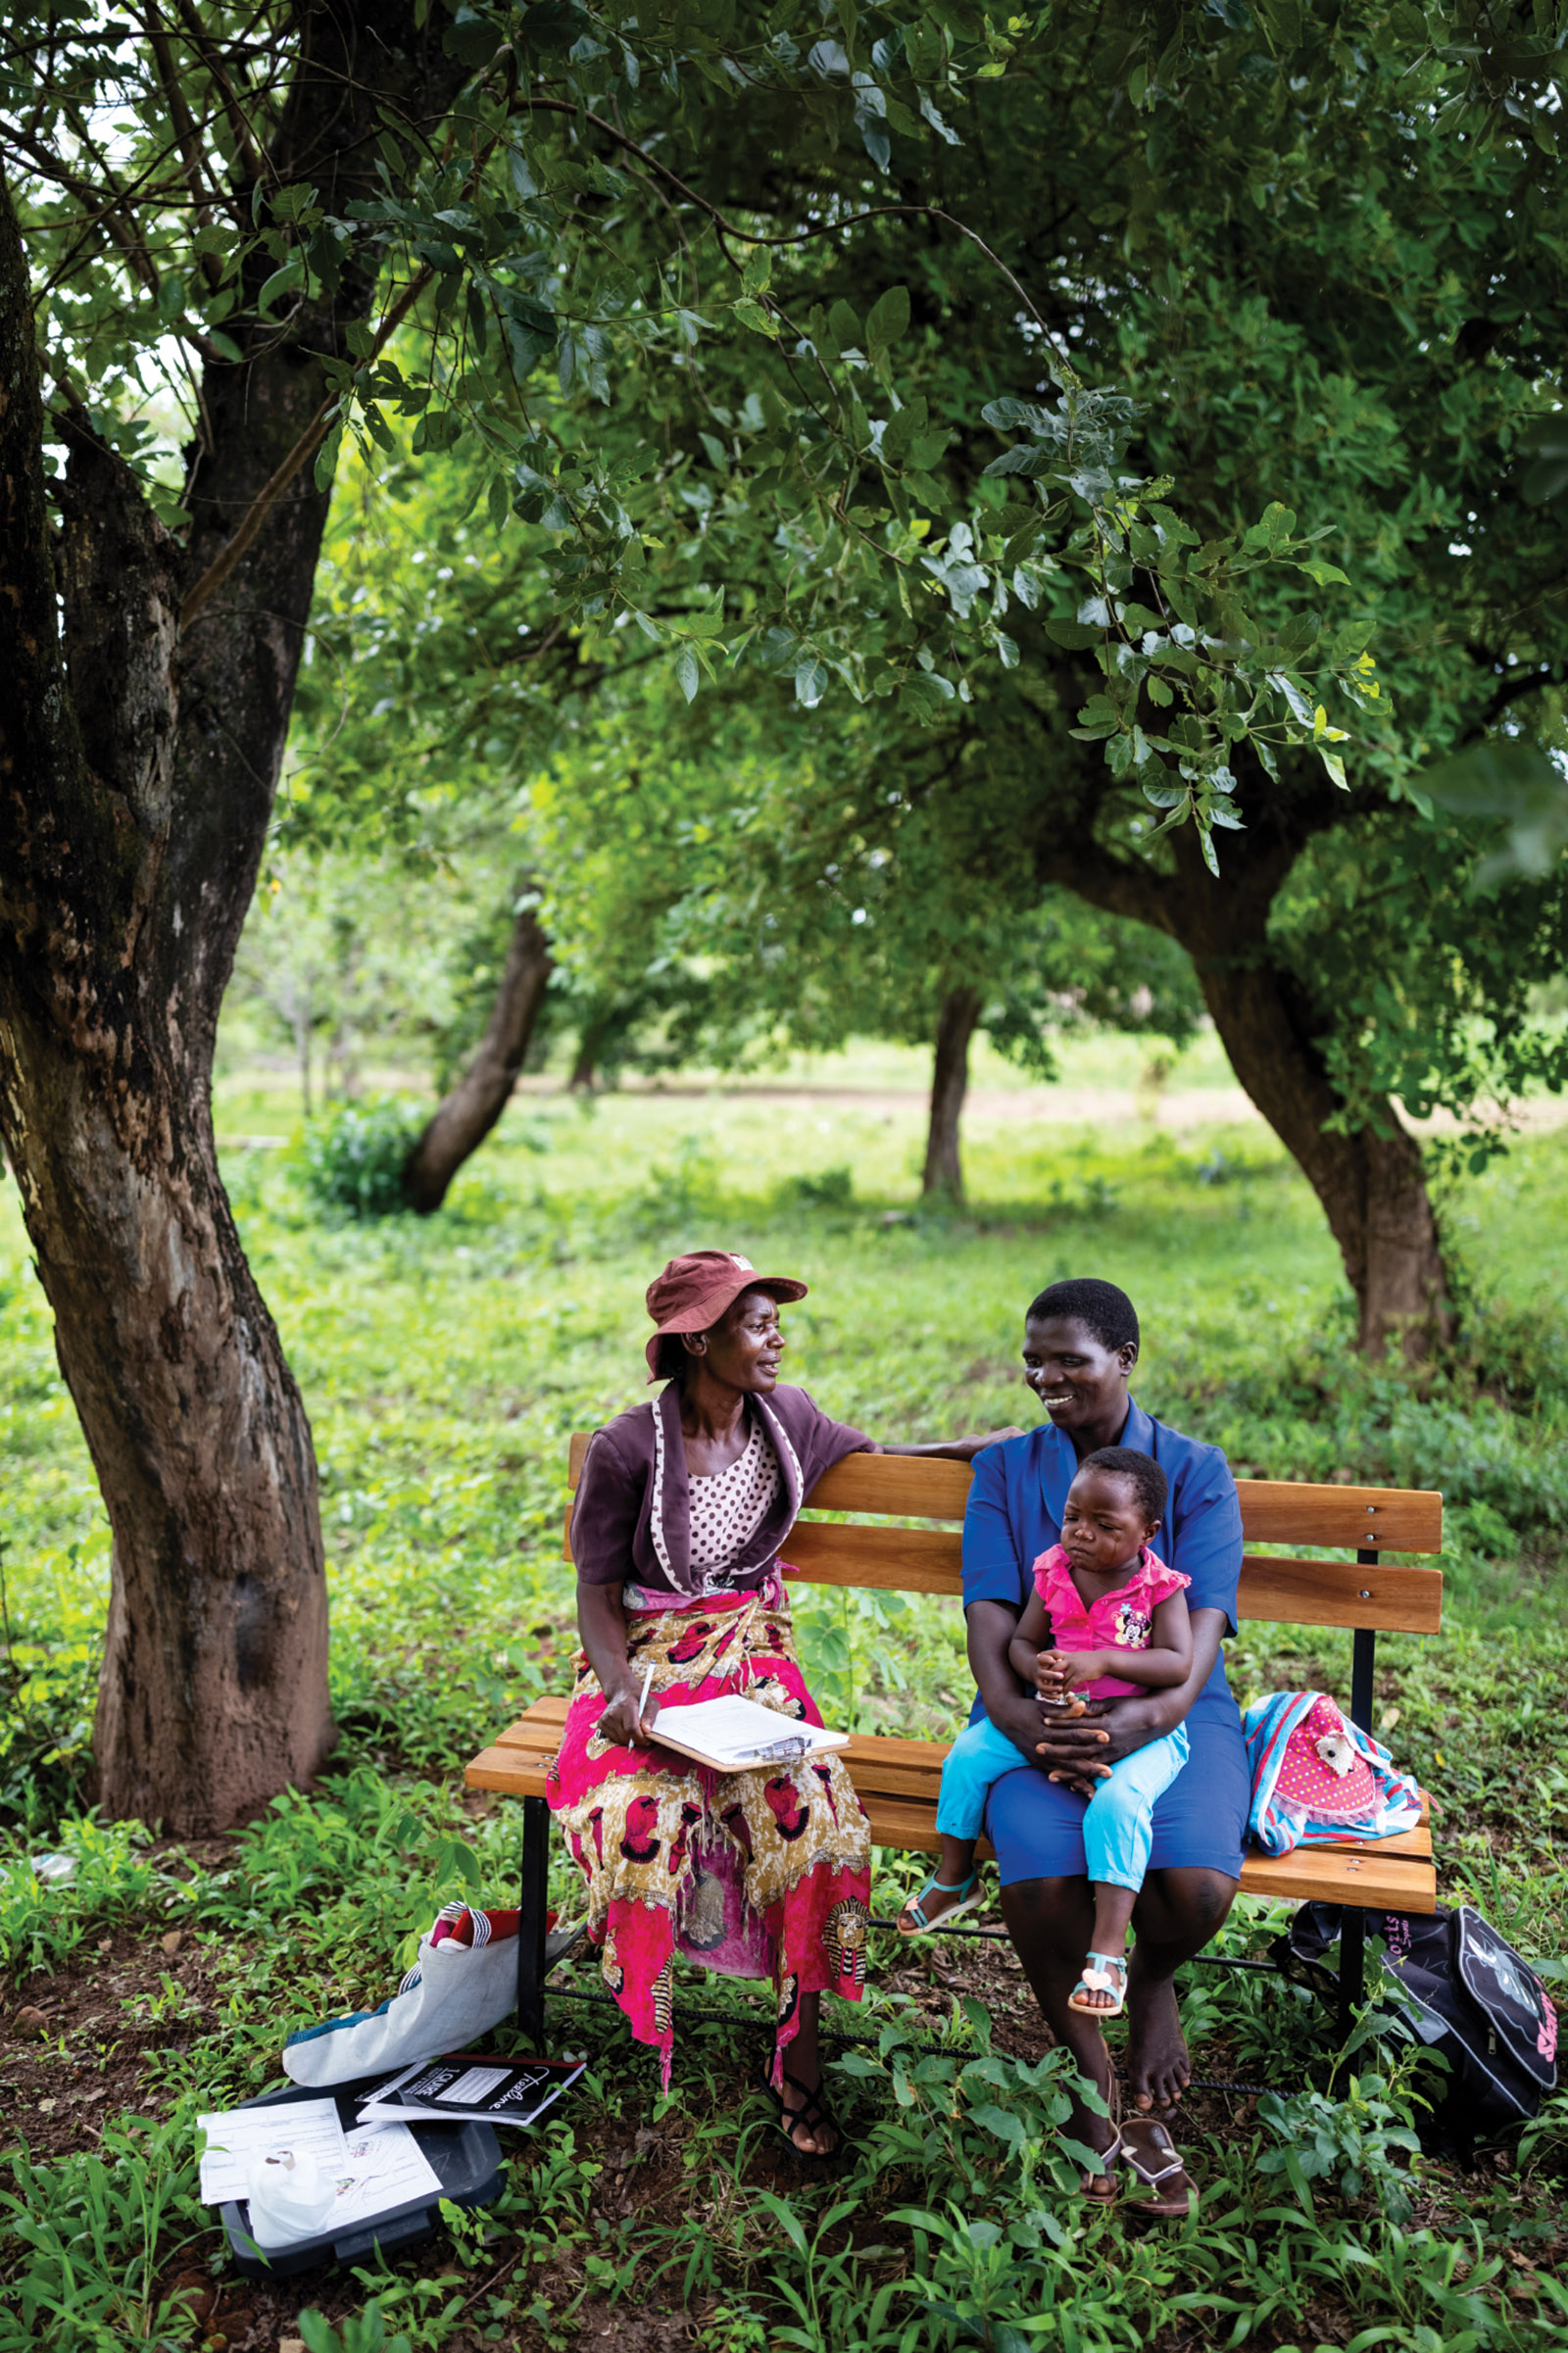 Two adults and a child on friendship bench, Masvingo, Zimbabwe